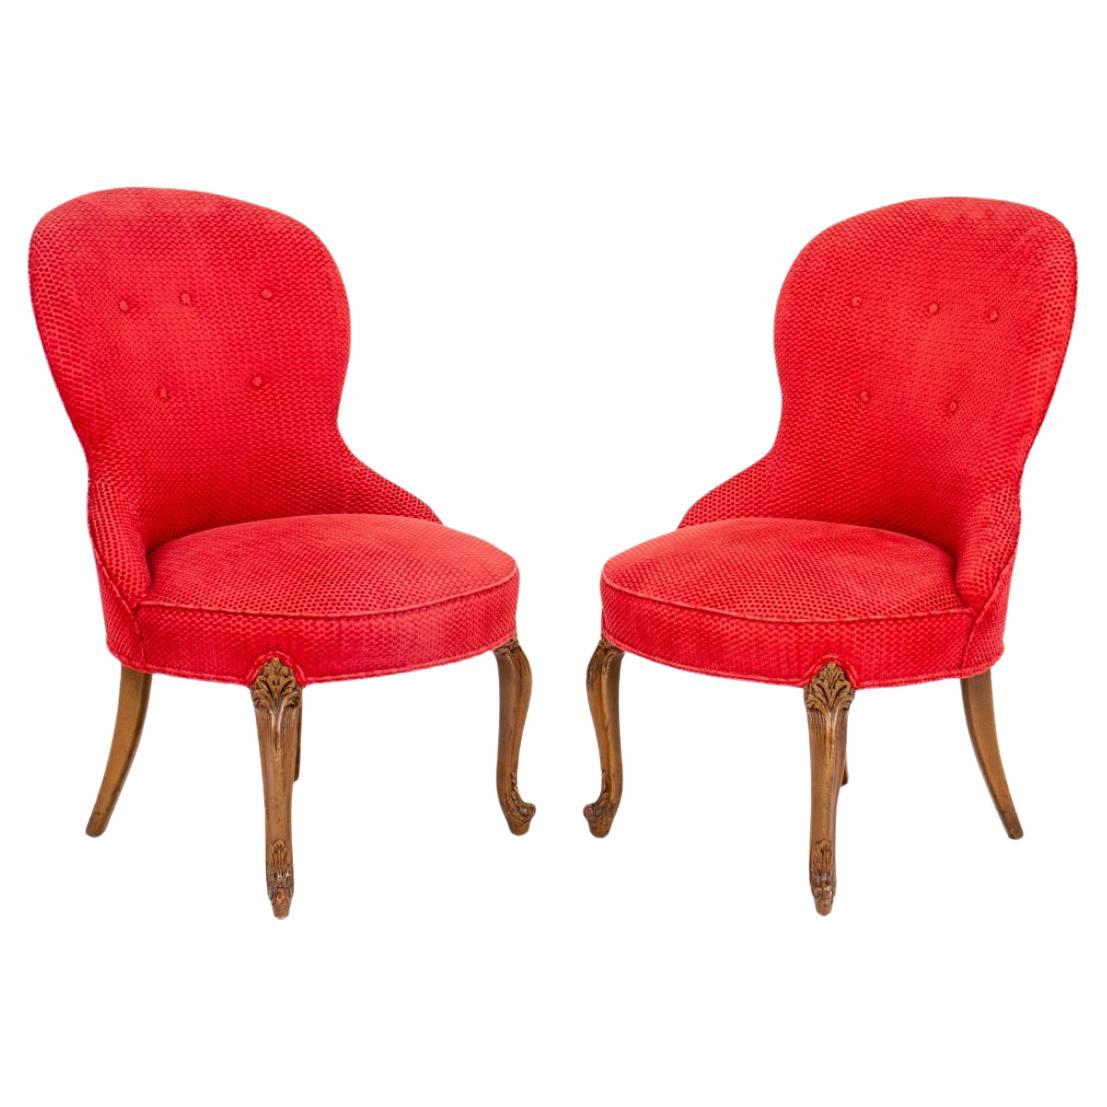 Victorian Manner Slipper Chairs, Pair